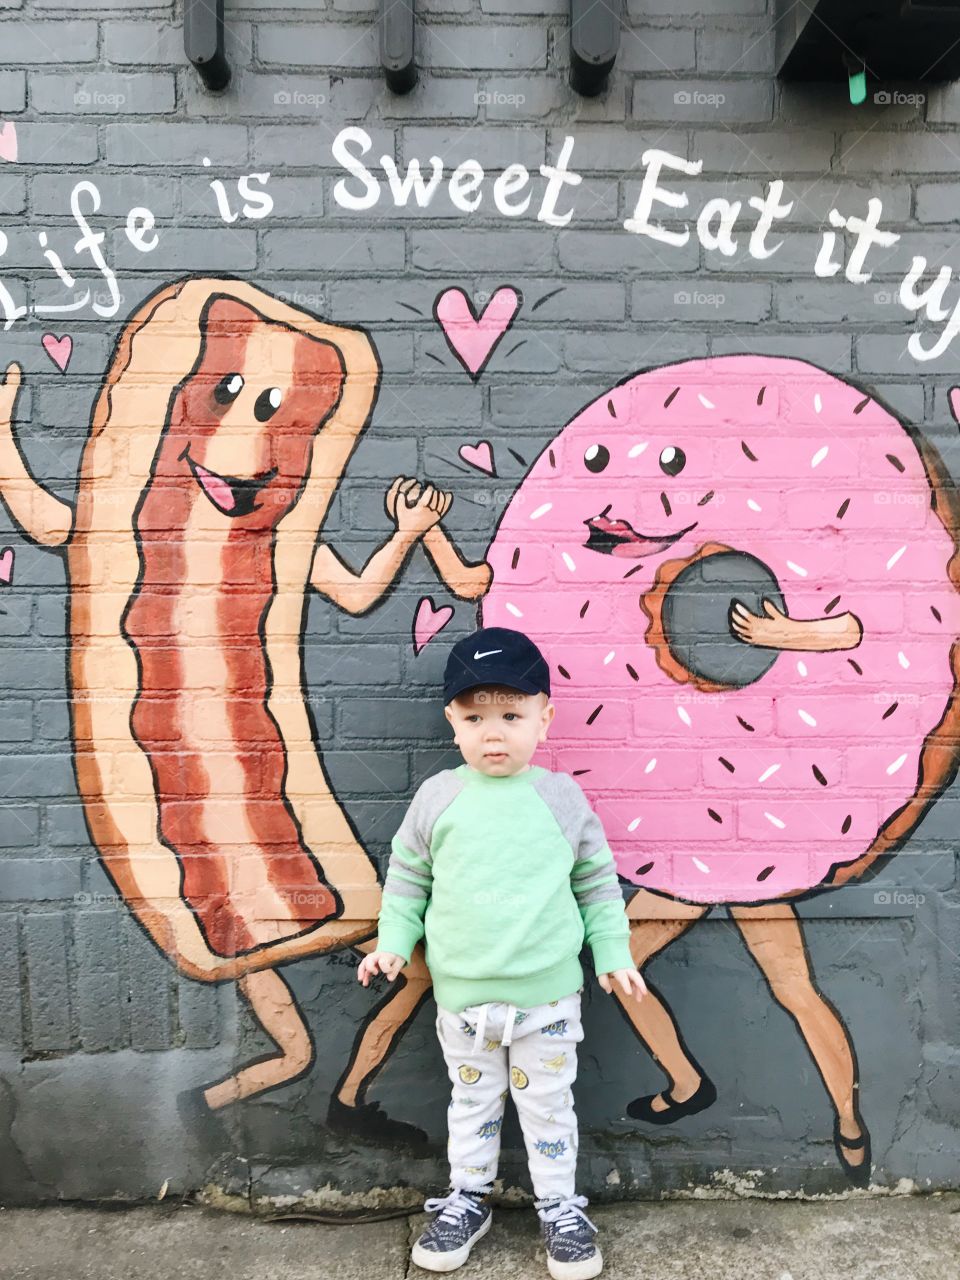 Donut shop mural 